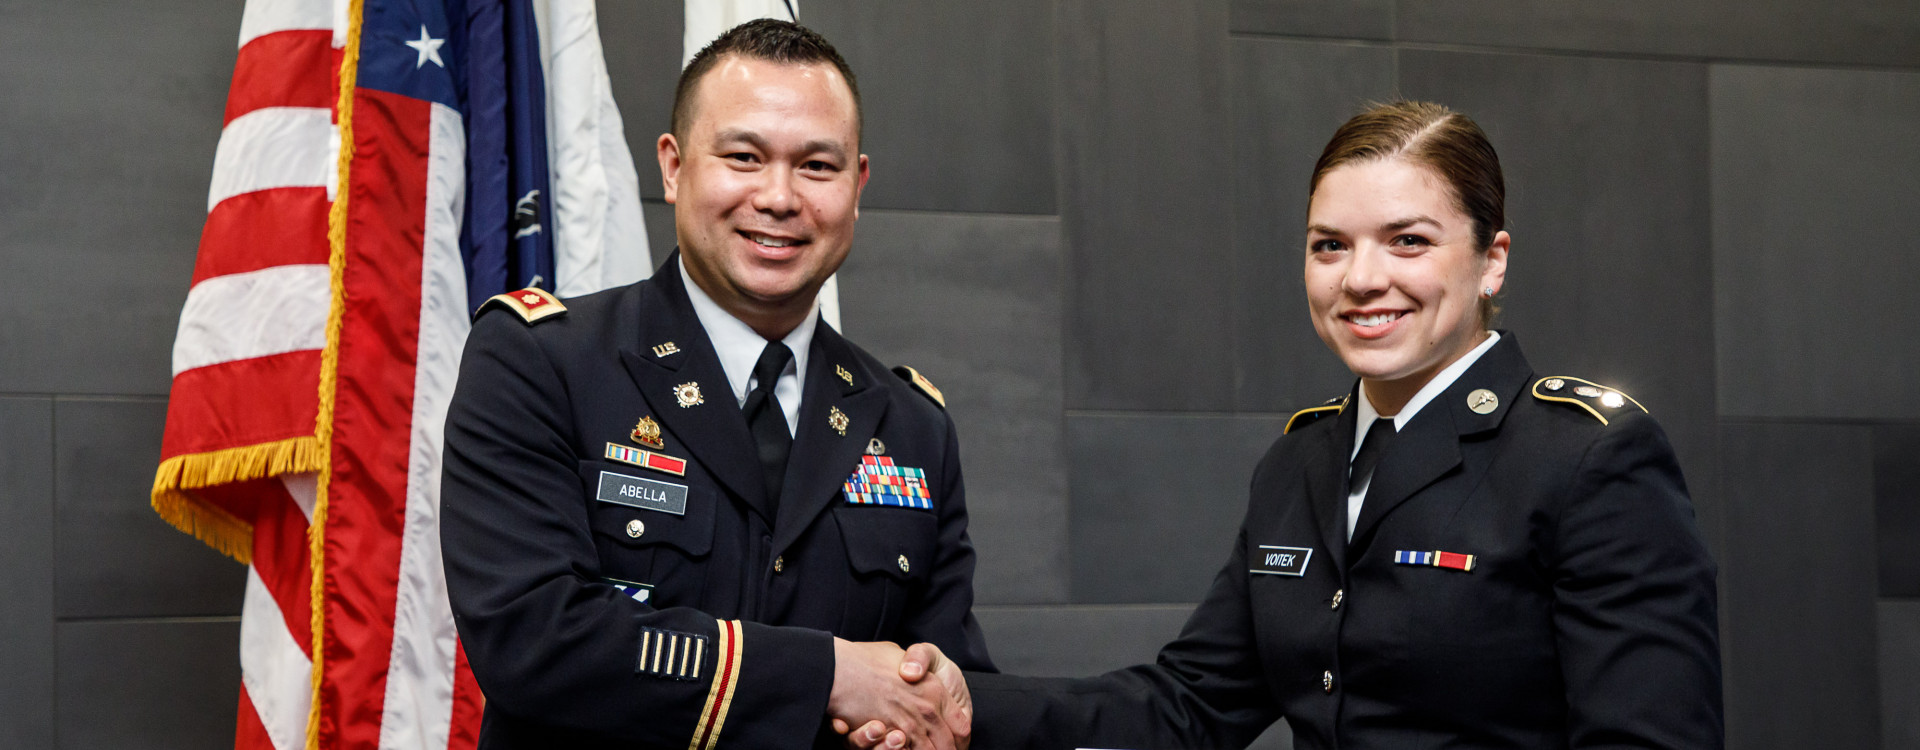 Cadet receiving an award at the ROTC Awards Ceremony Spring 2019